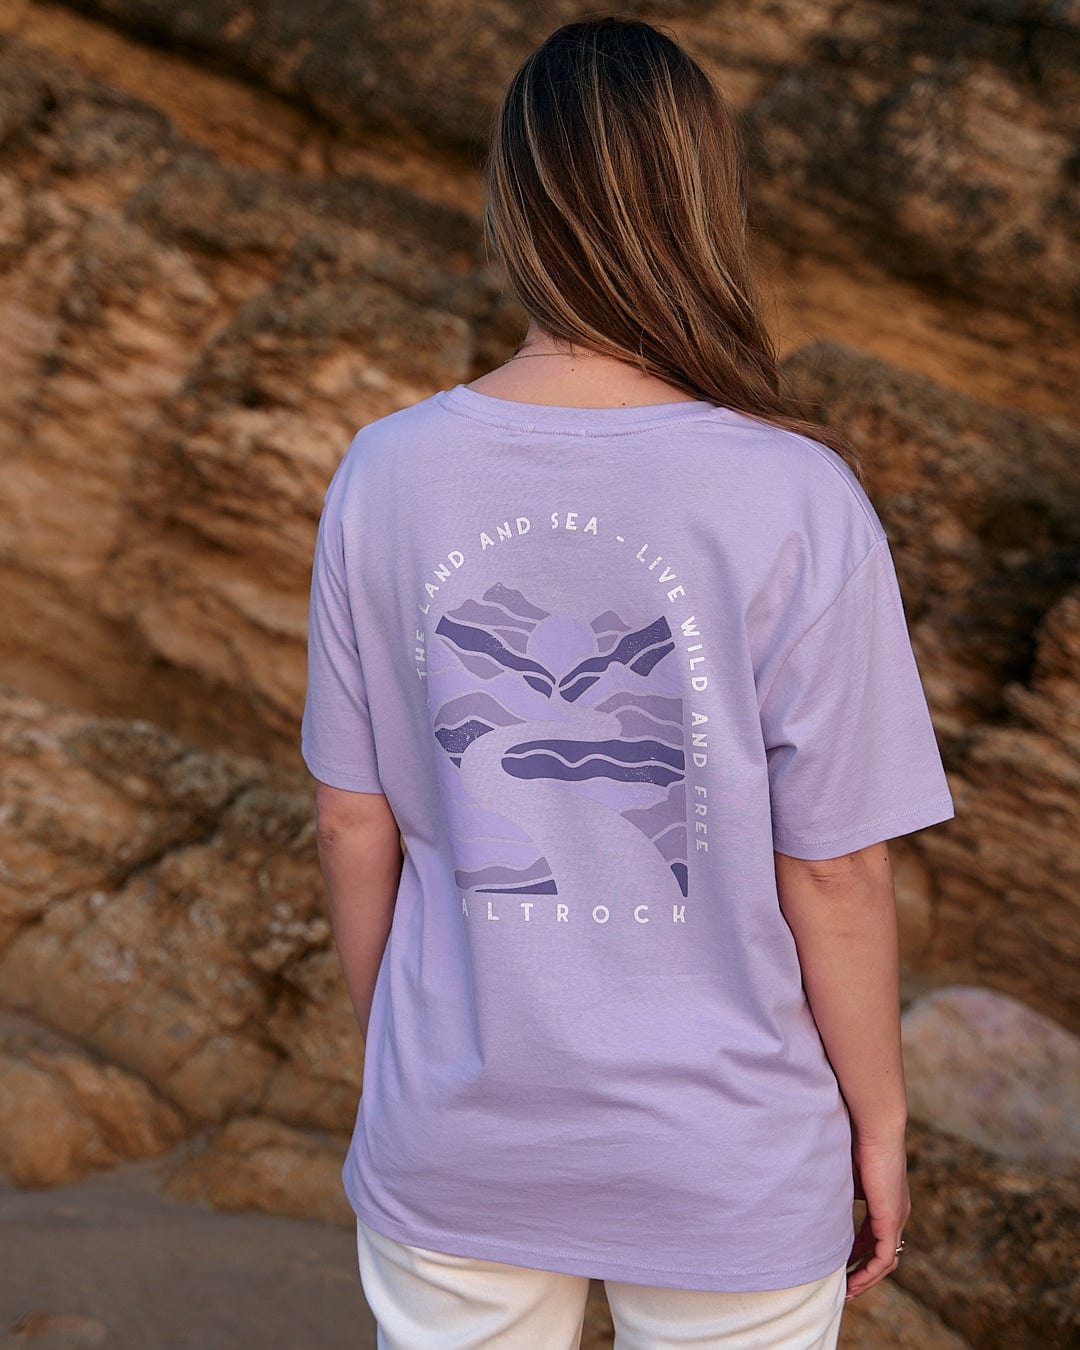 The back of a woman wearing a Saltrock Live Wild - Womens Short Sleeve T-Shirt - Light Purple.